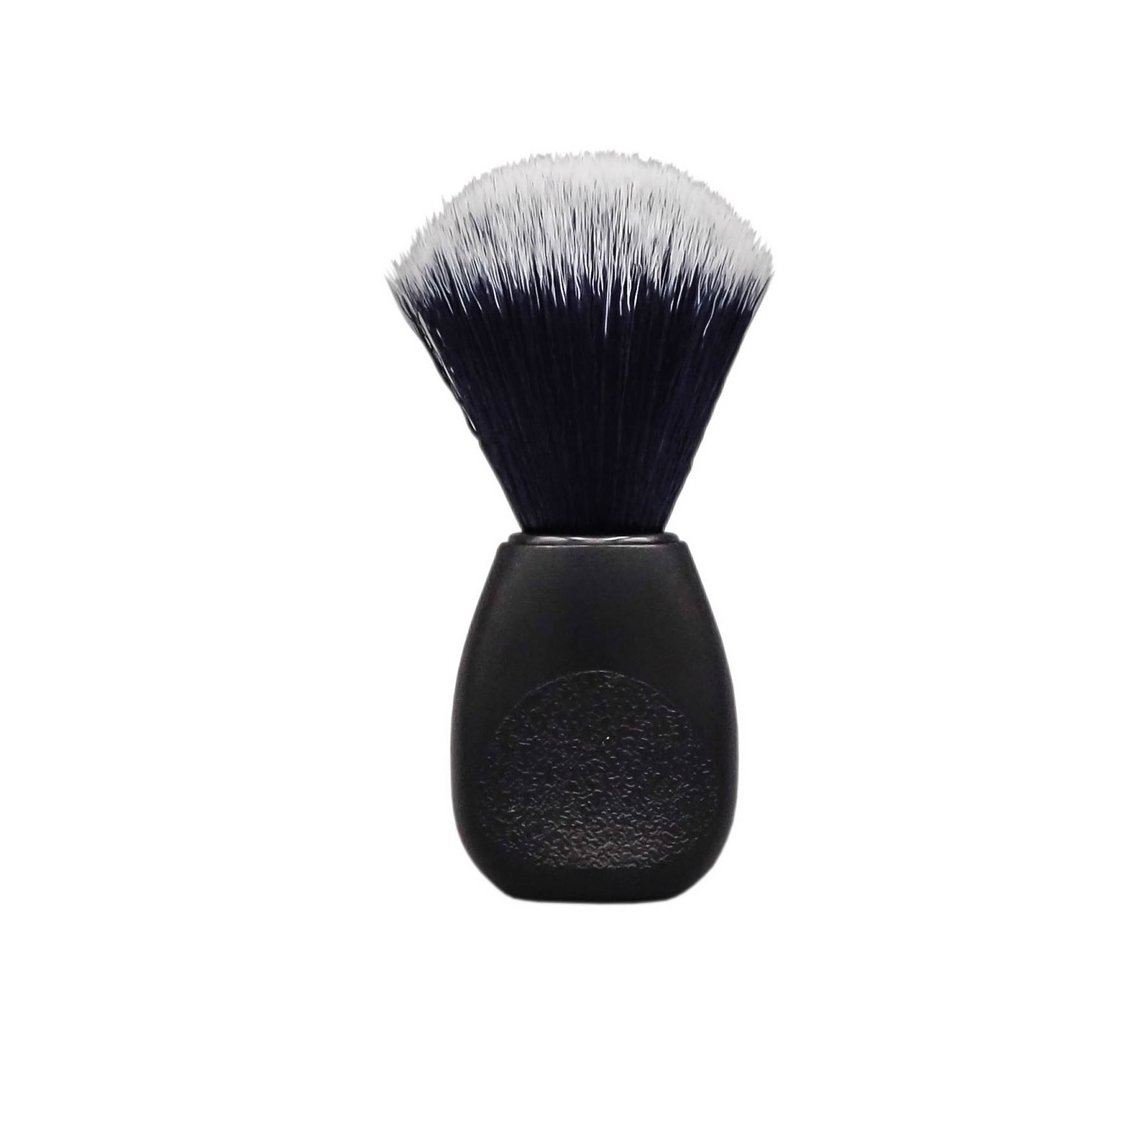 Shaving brush vegan synthetic fiber black handle